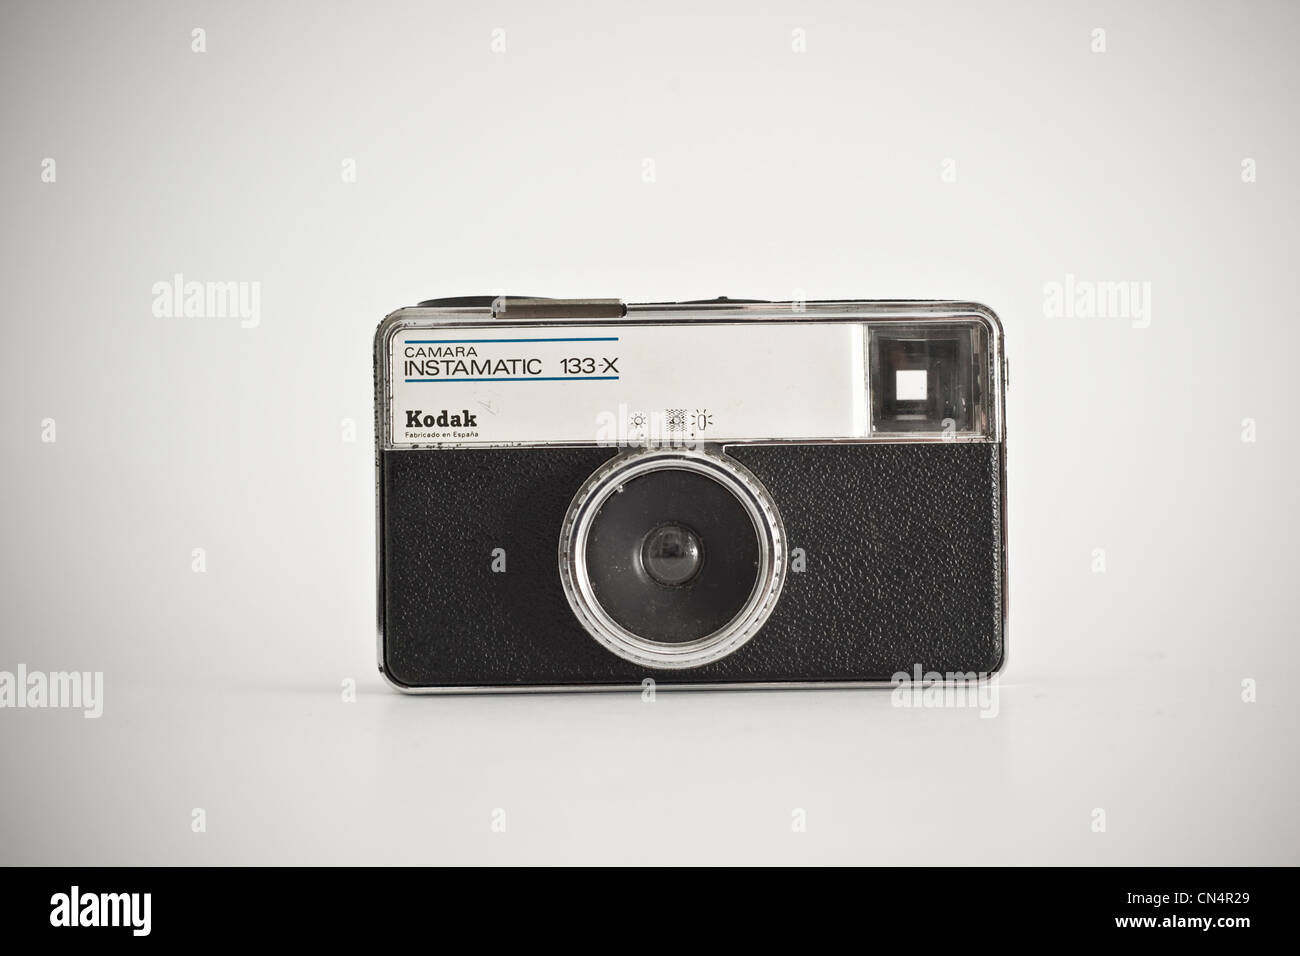 Classic old camera Instamatic 133-x camera (kodak) Stock Photo